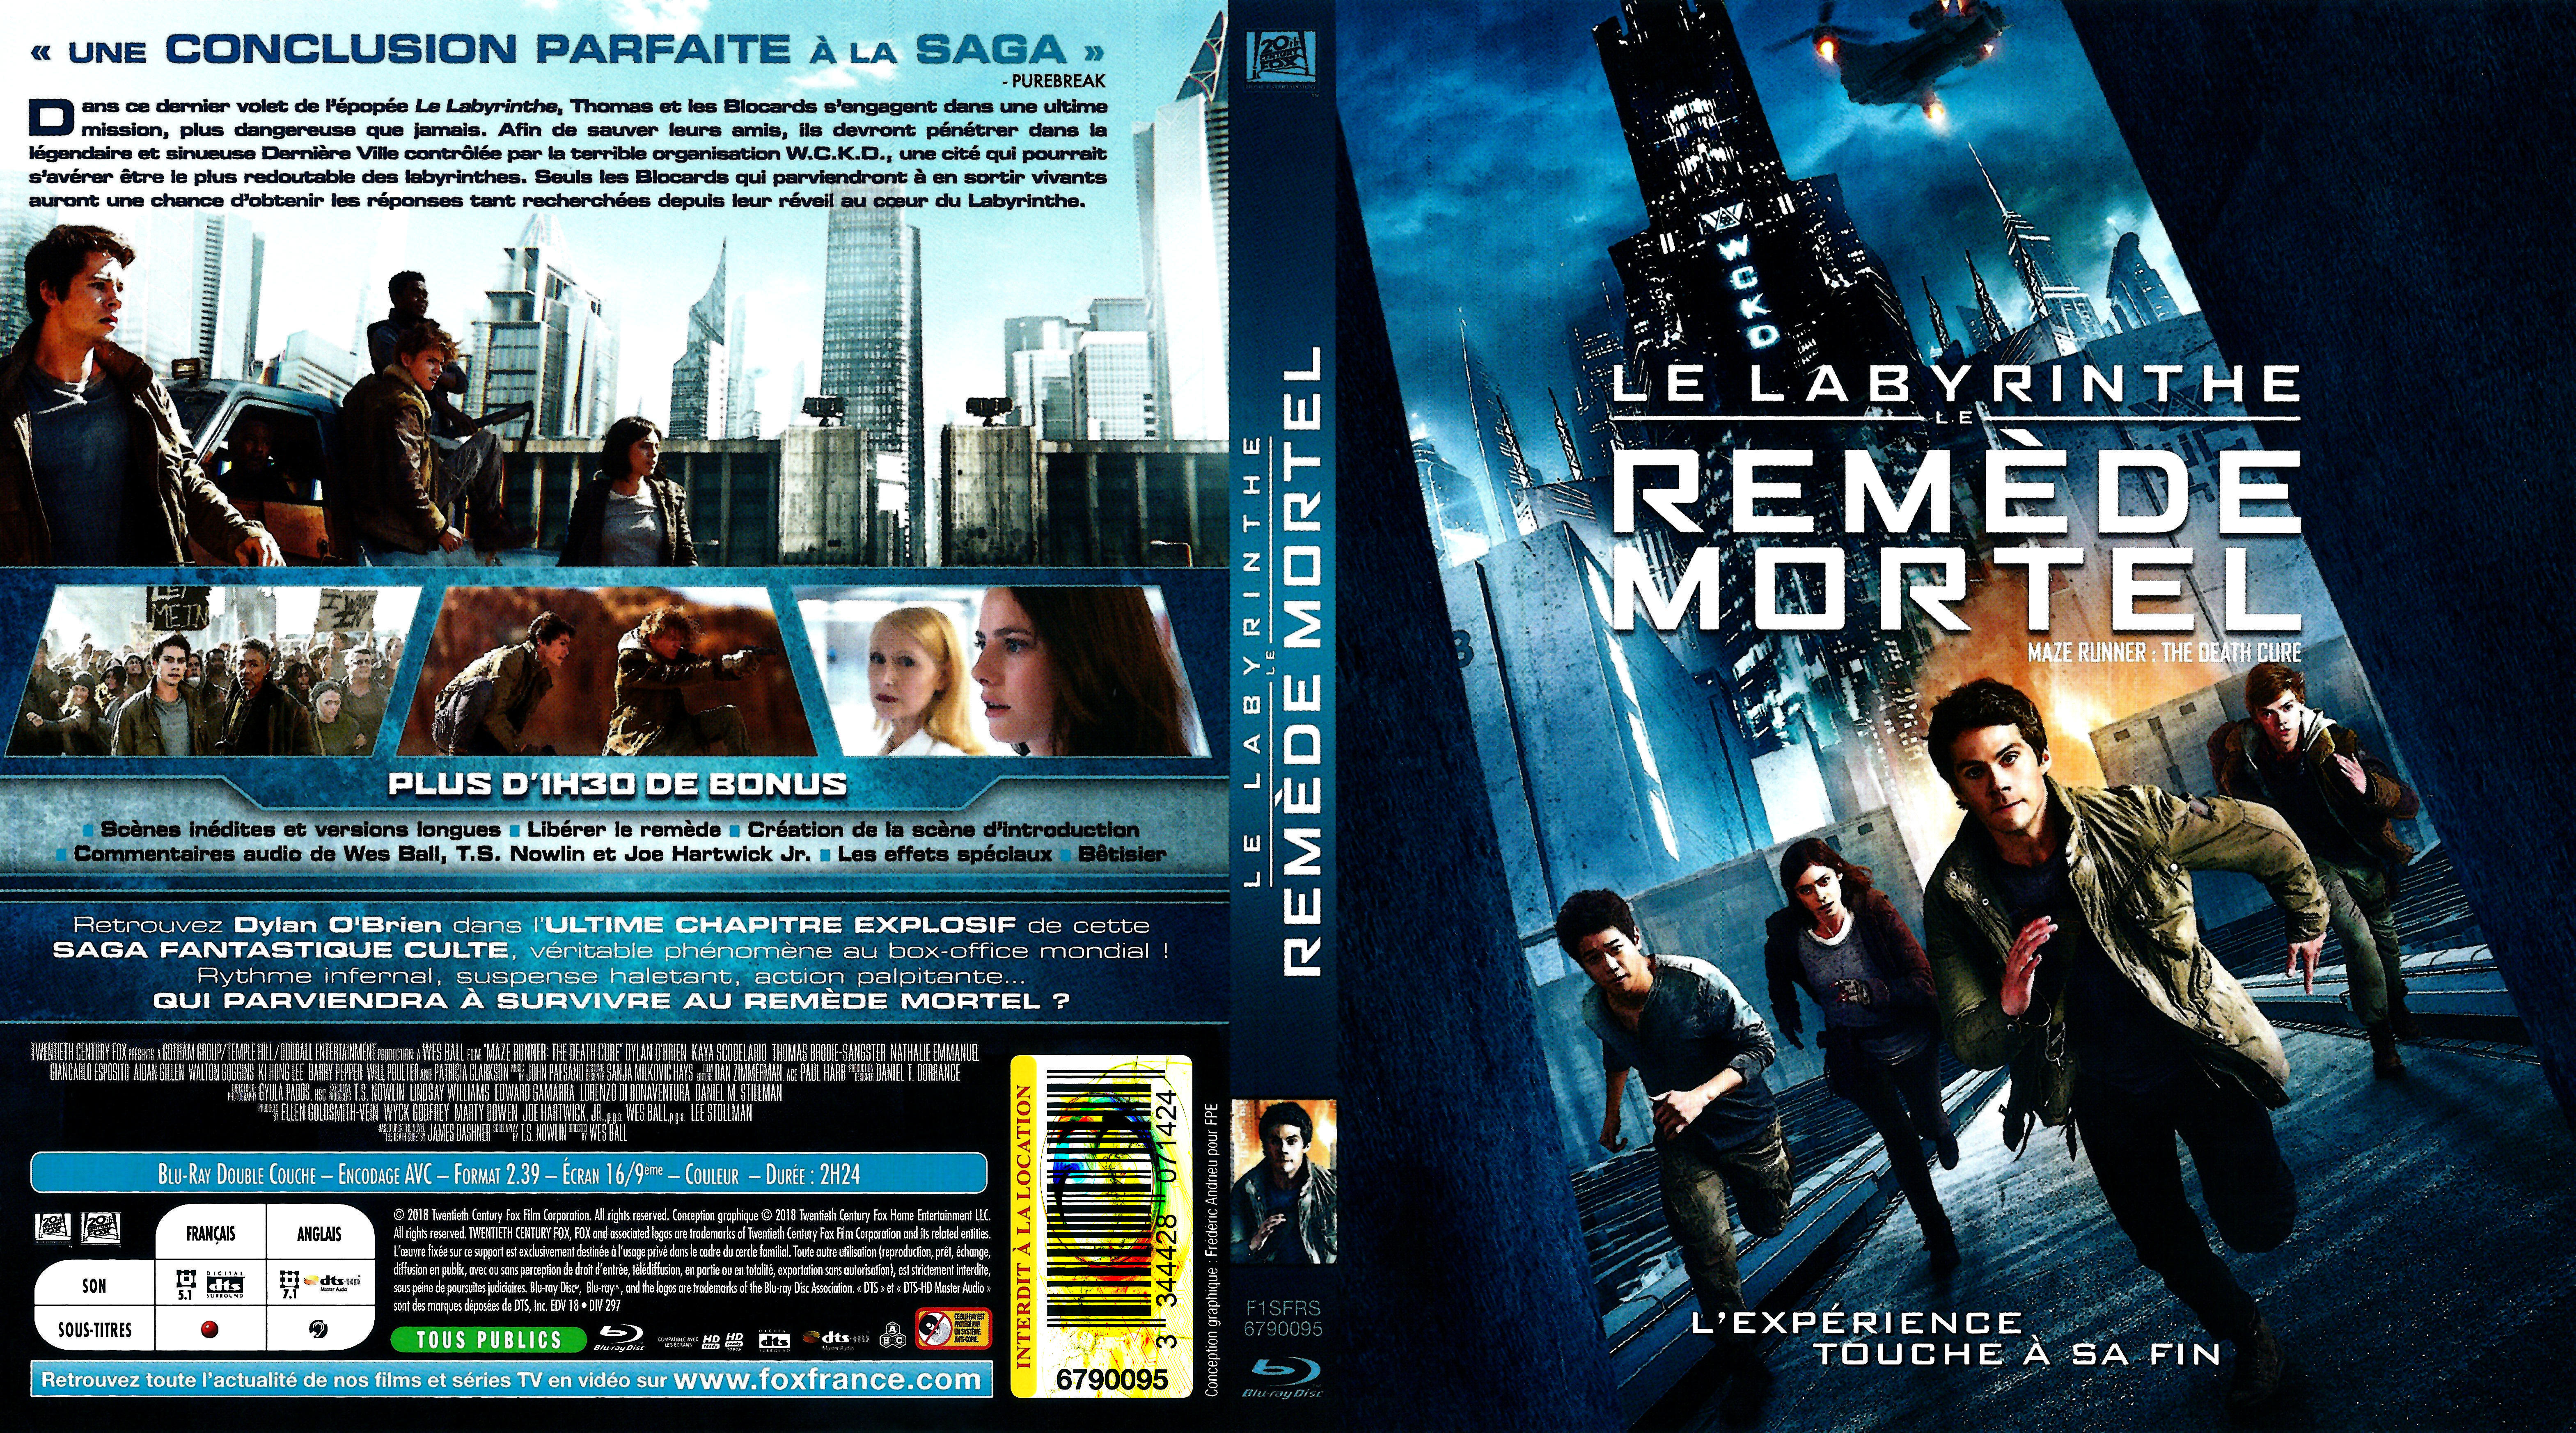 Jaquette DVD Le Labyrinthe 3 Remede Mortel (BLU-RAY)